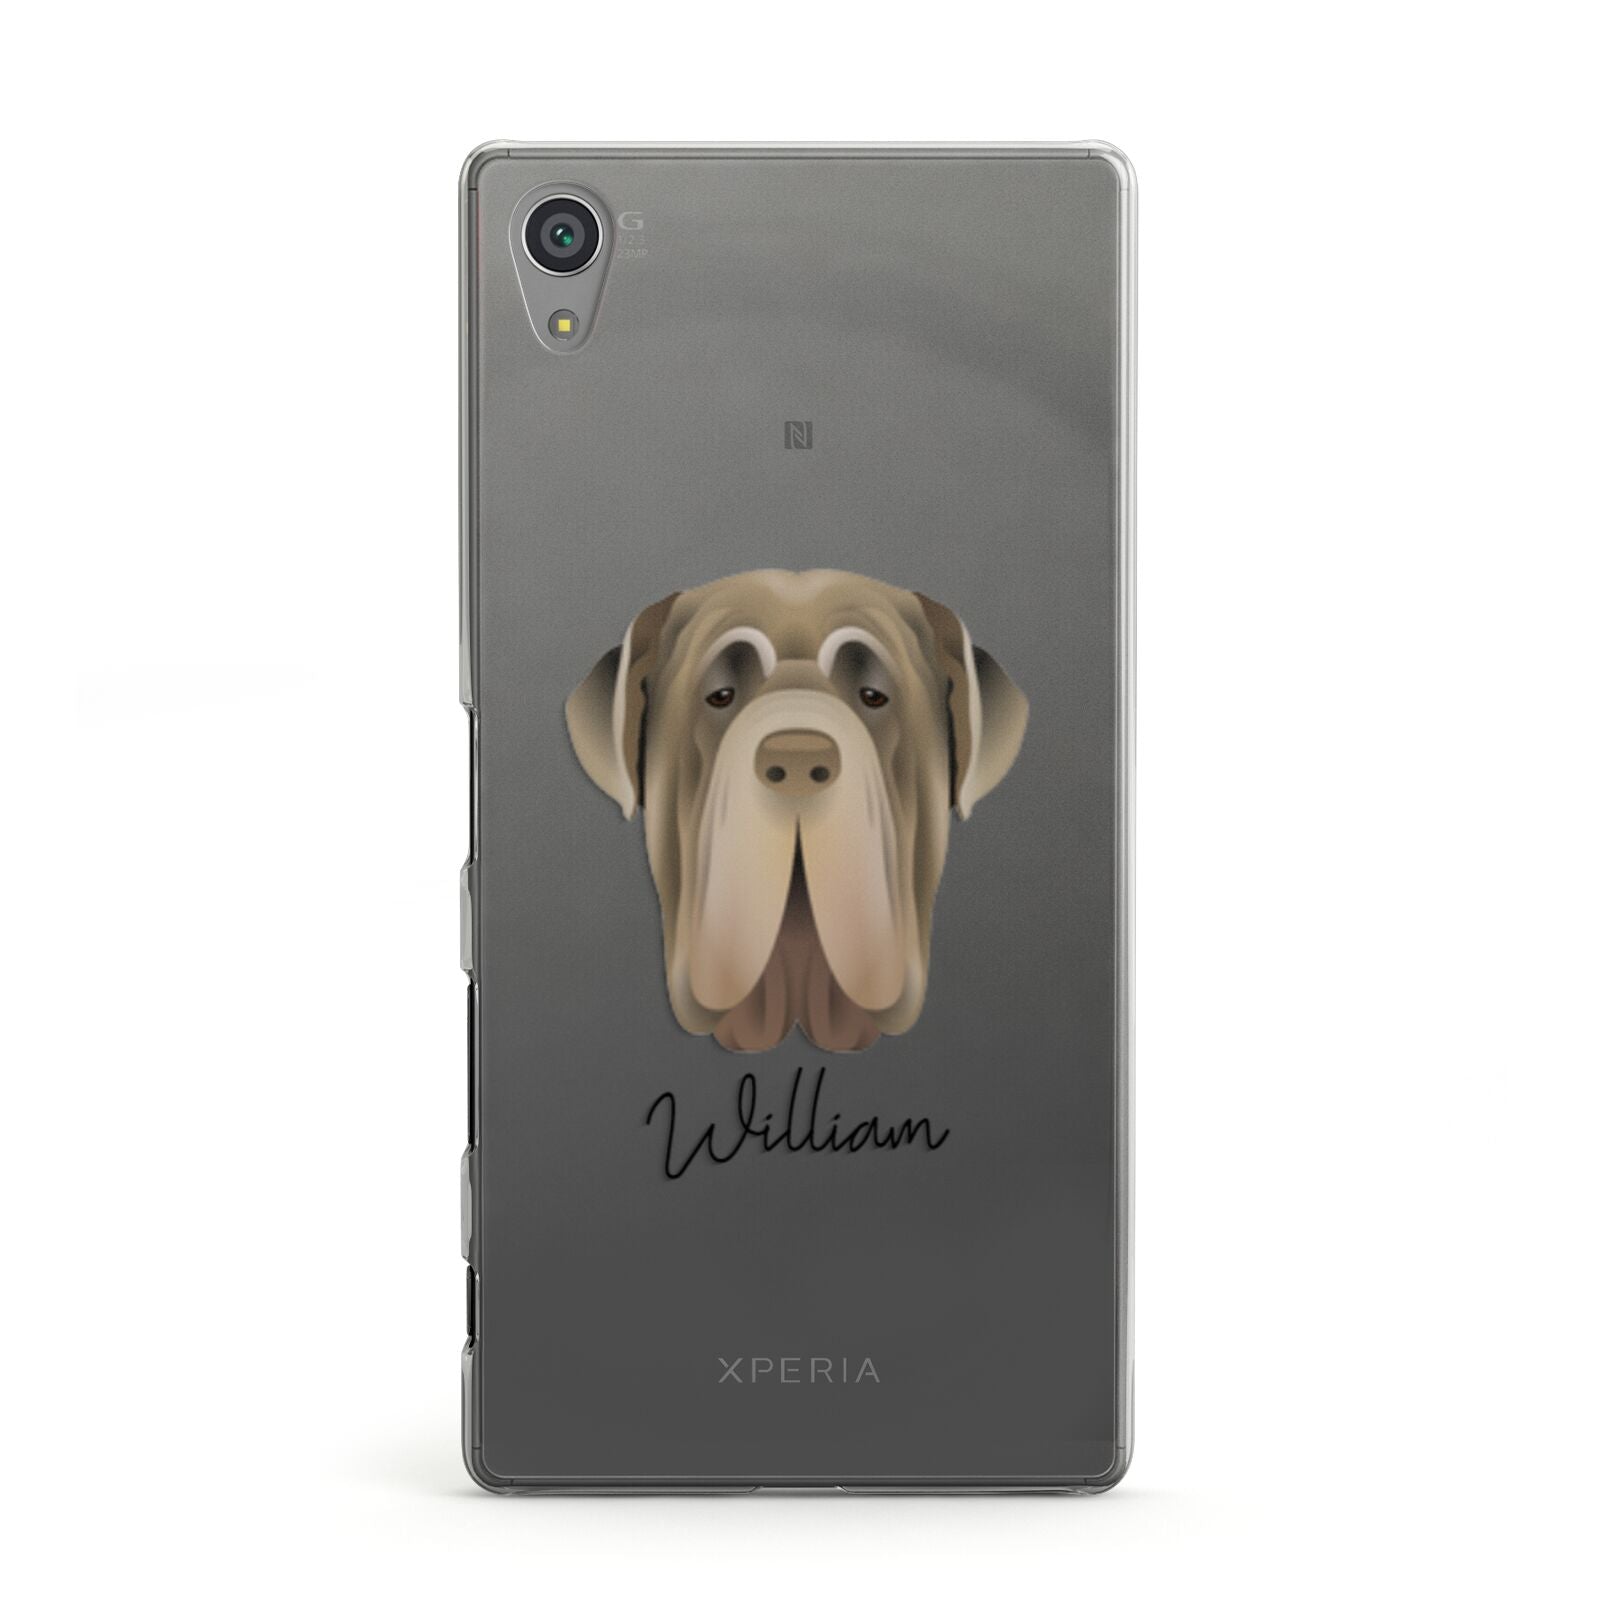 Neapolitan Mastiff Personalised Sony Xperia Case